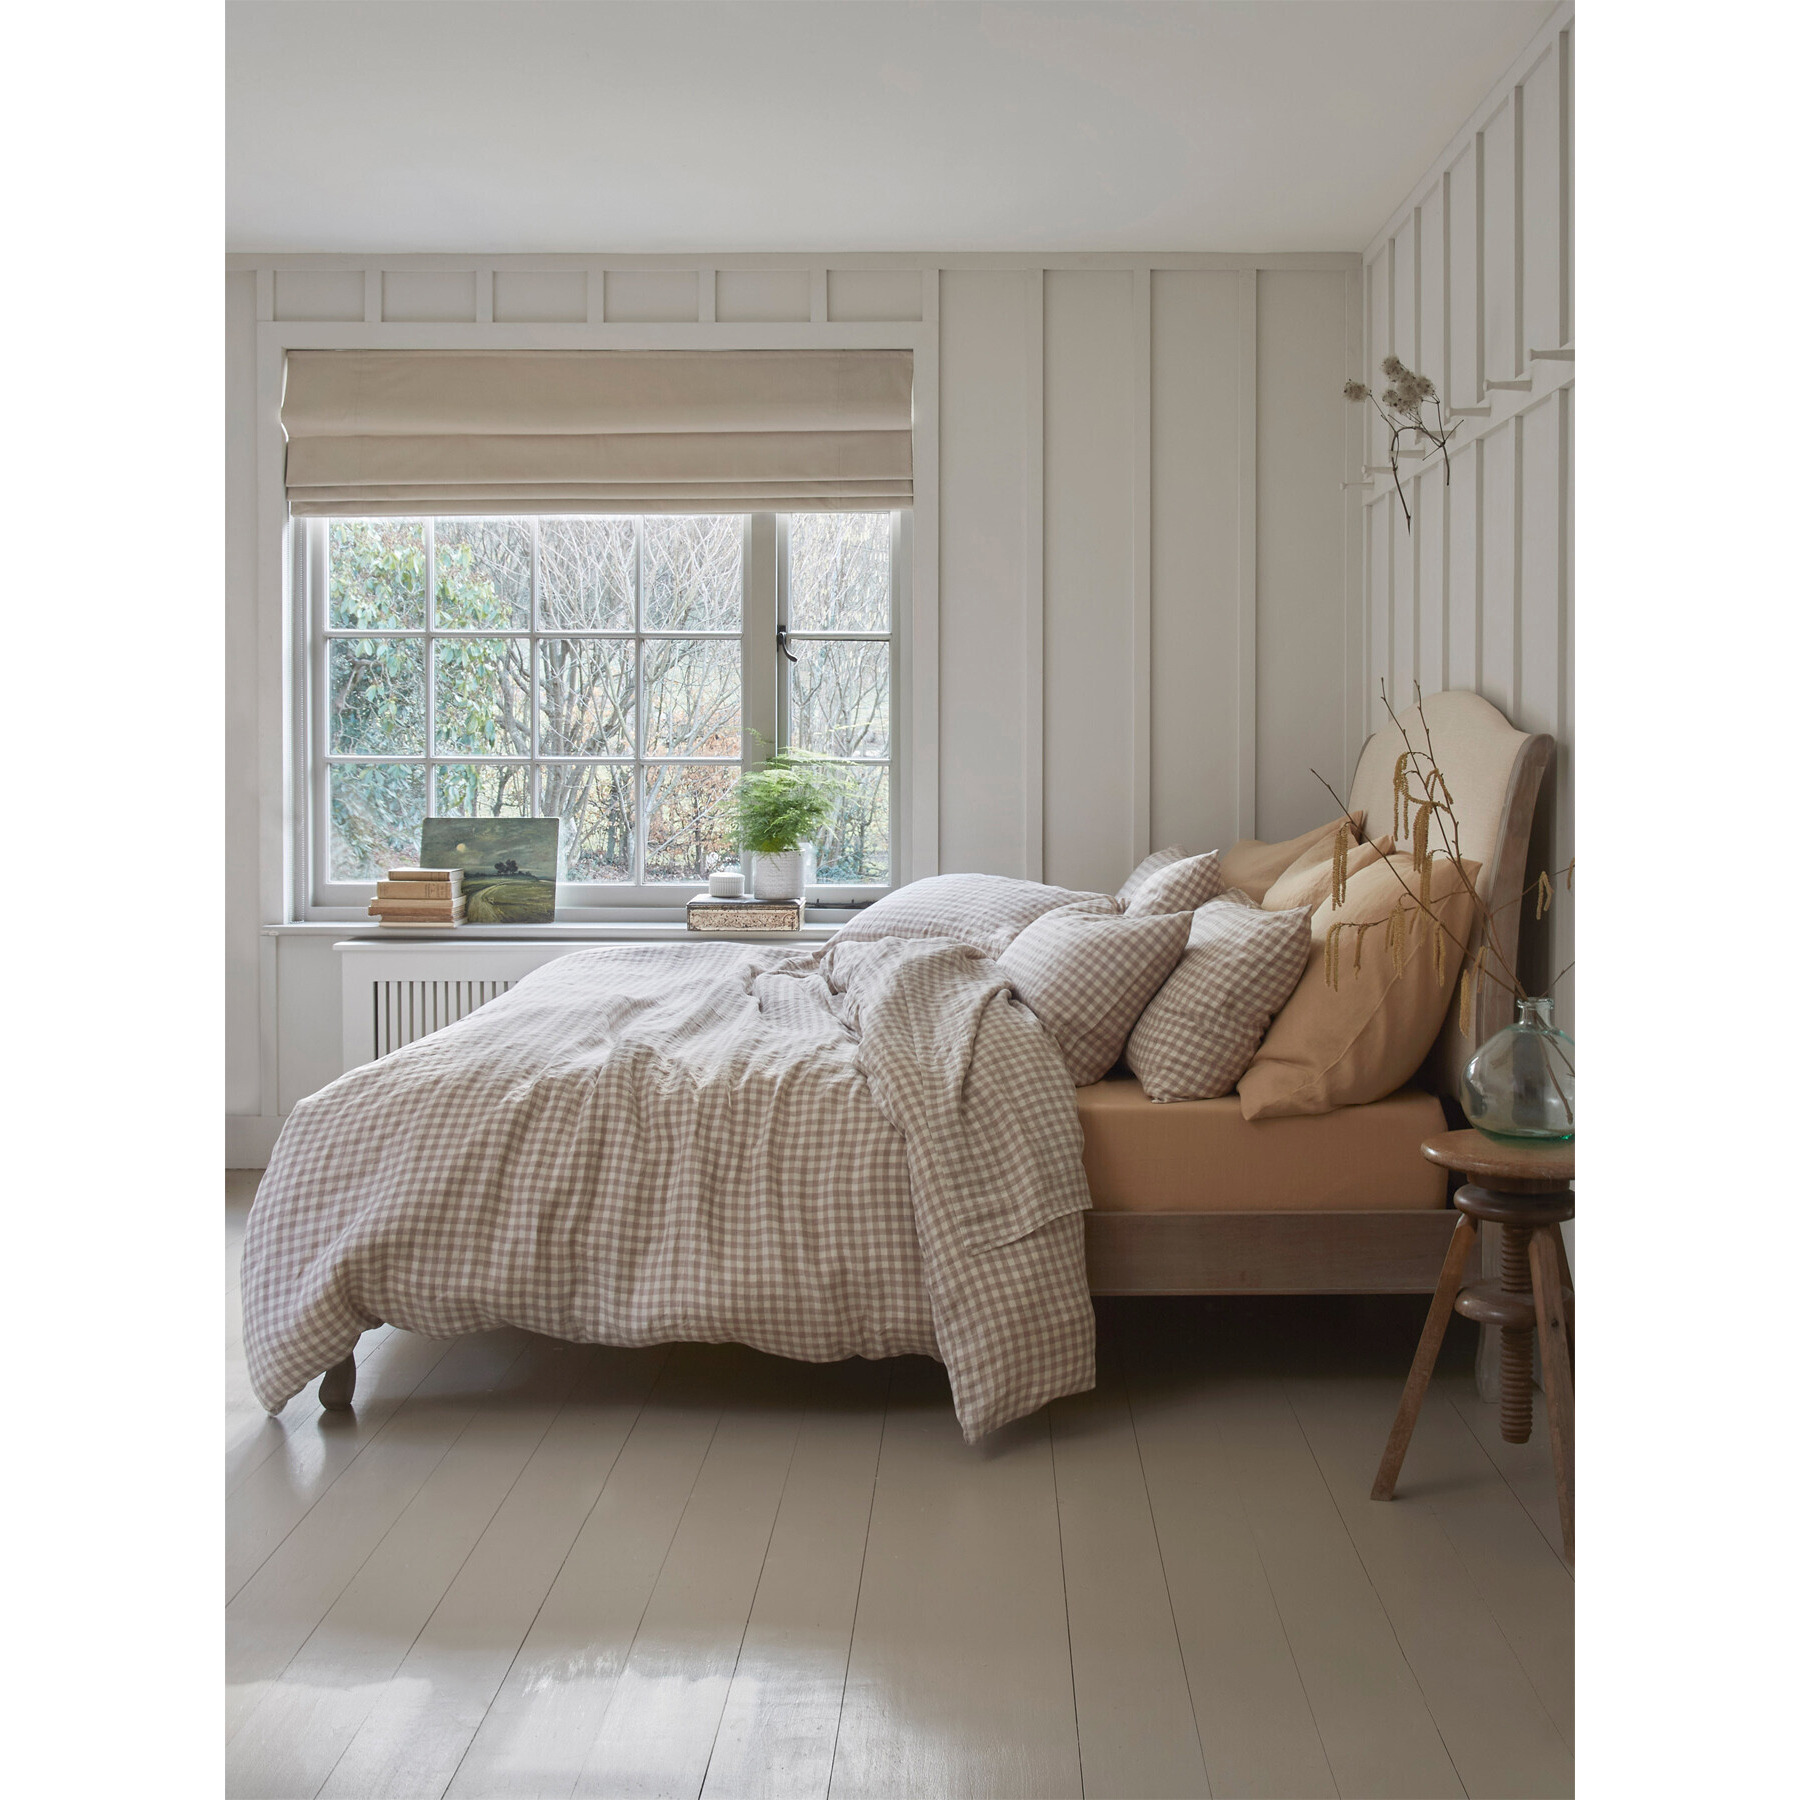 Piglet in Bed Gingham Linen Flat Sheet - Size King Neutral - image 1